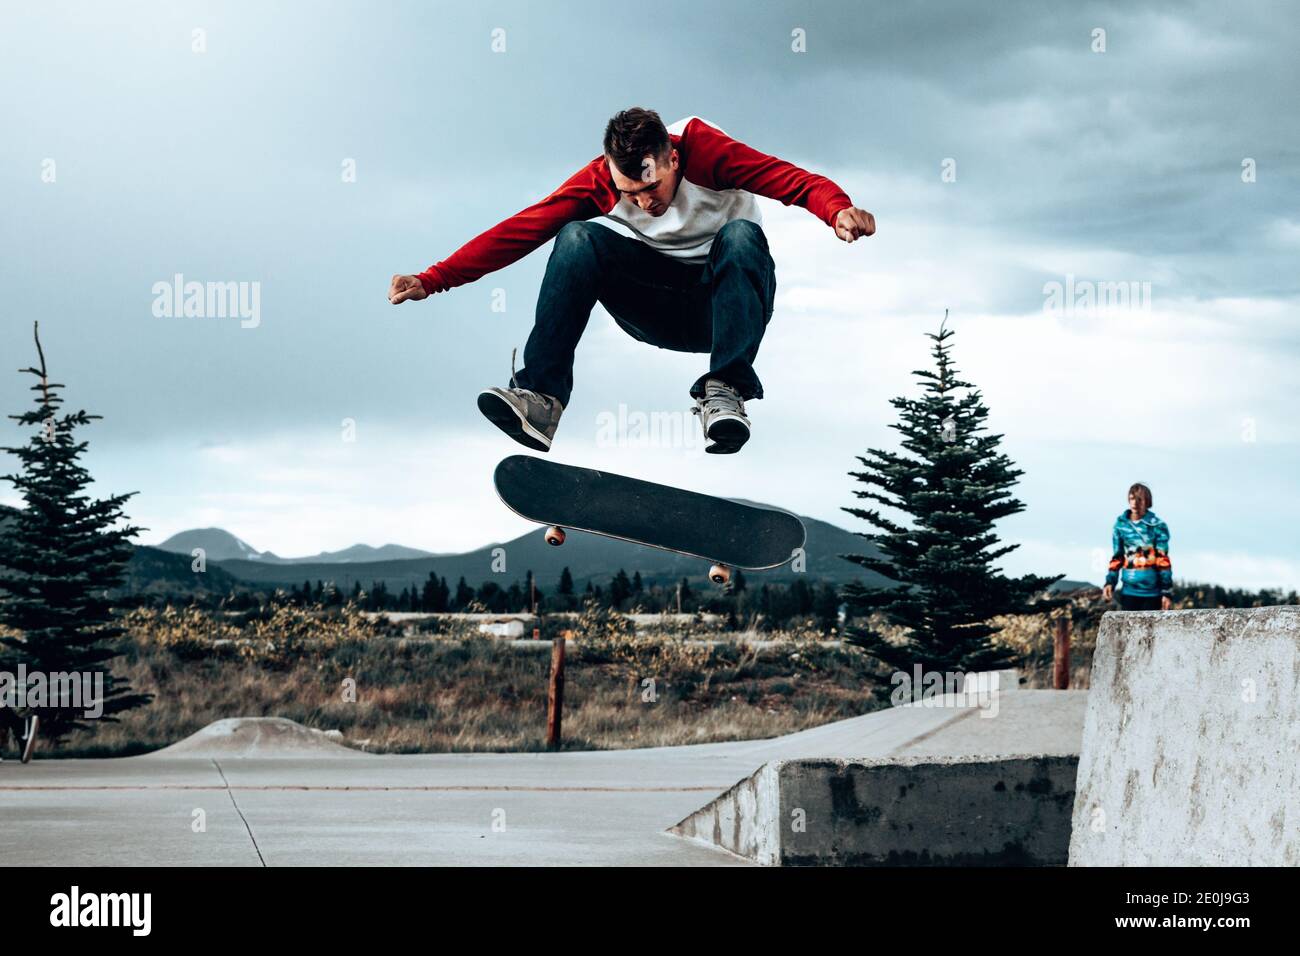 Male skateboarder flipping skateboard in the air at a skatepark Stock Photo